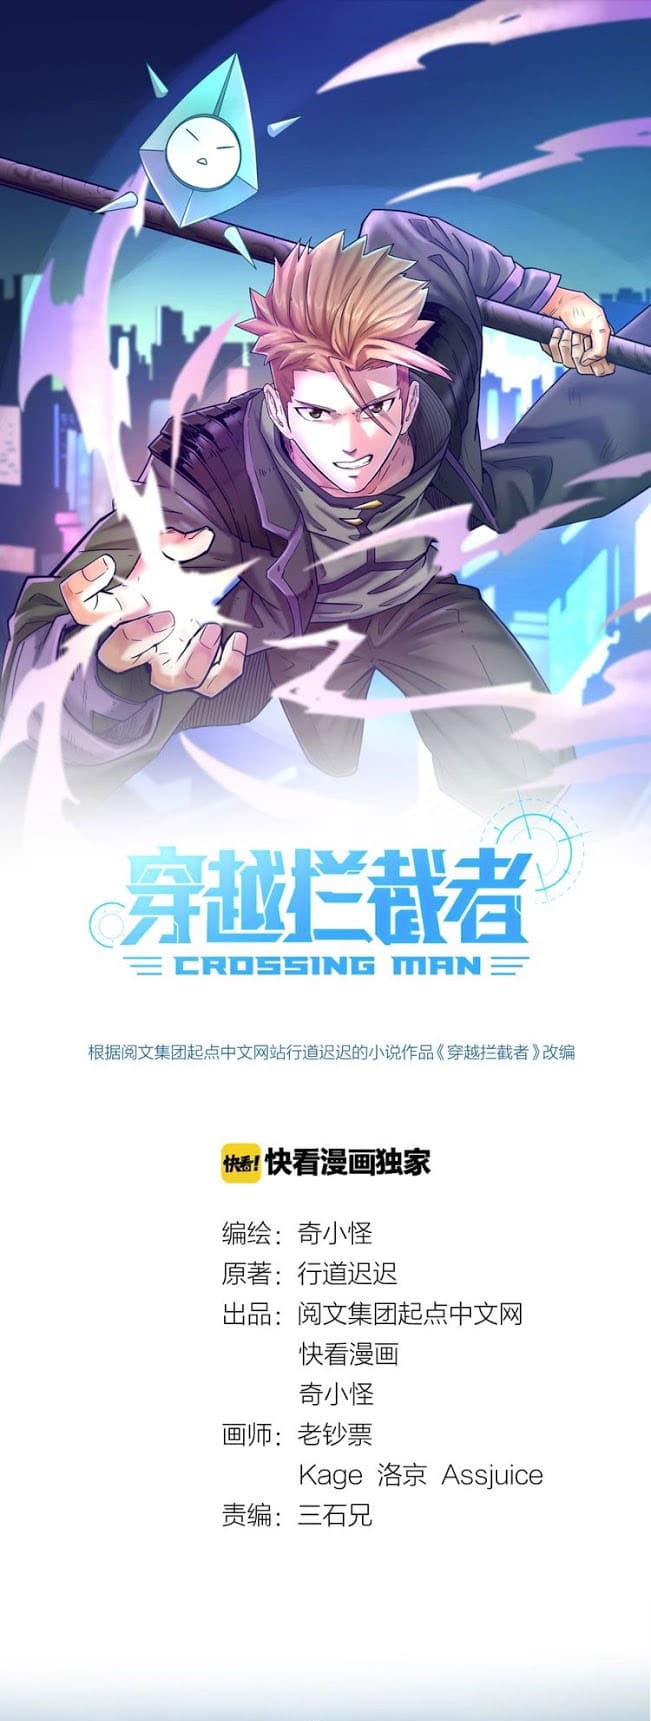 Crossing Man5 (1)